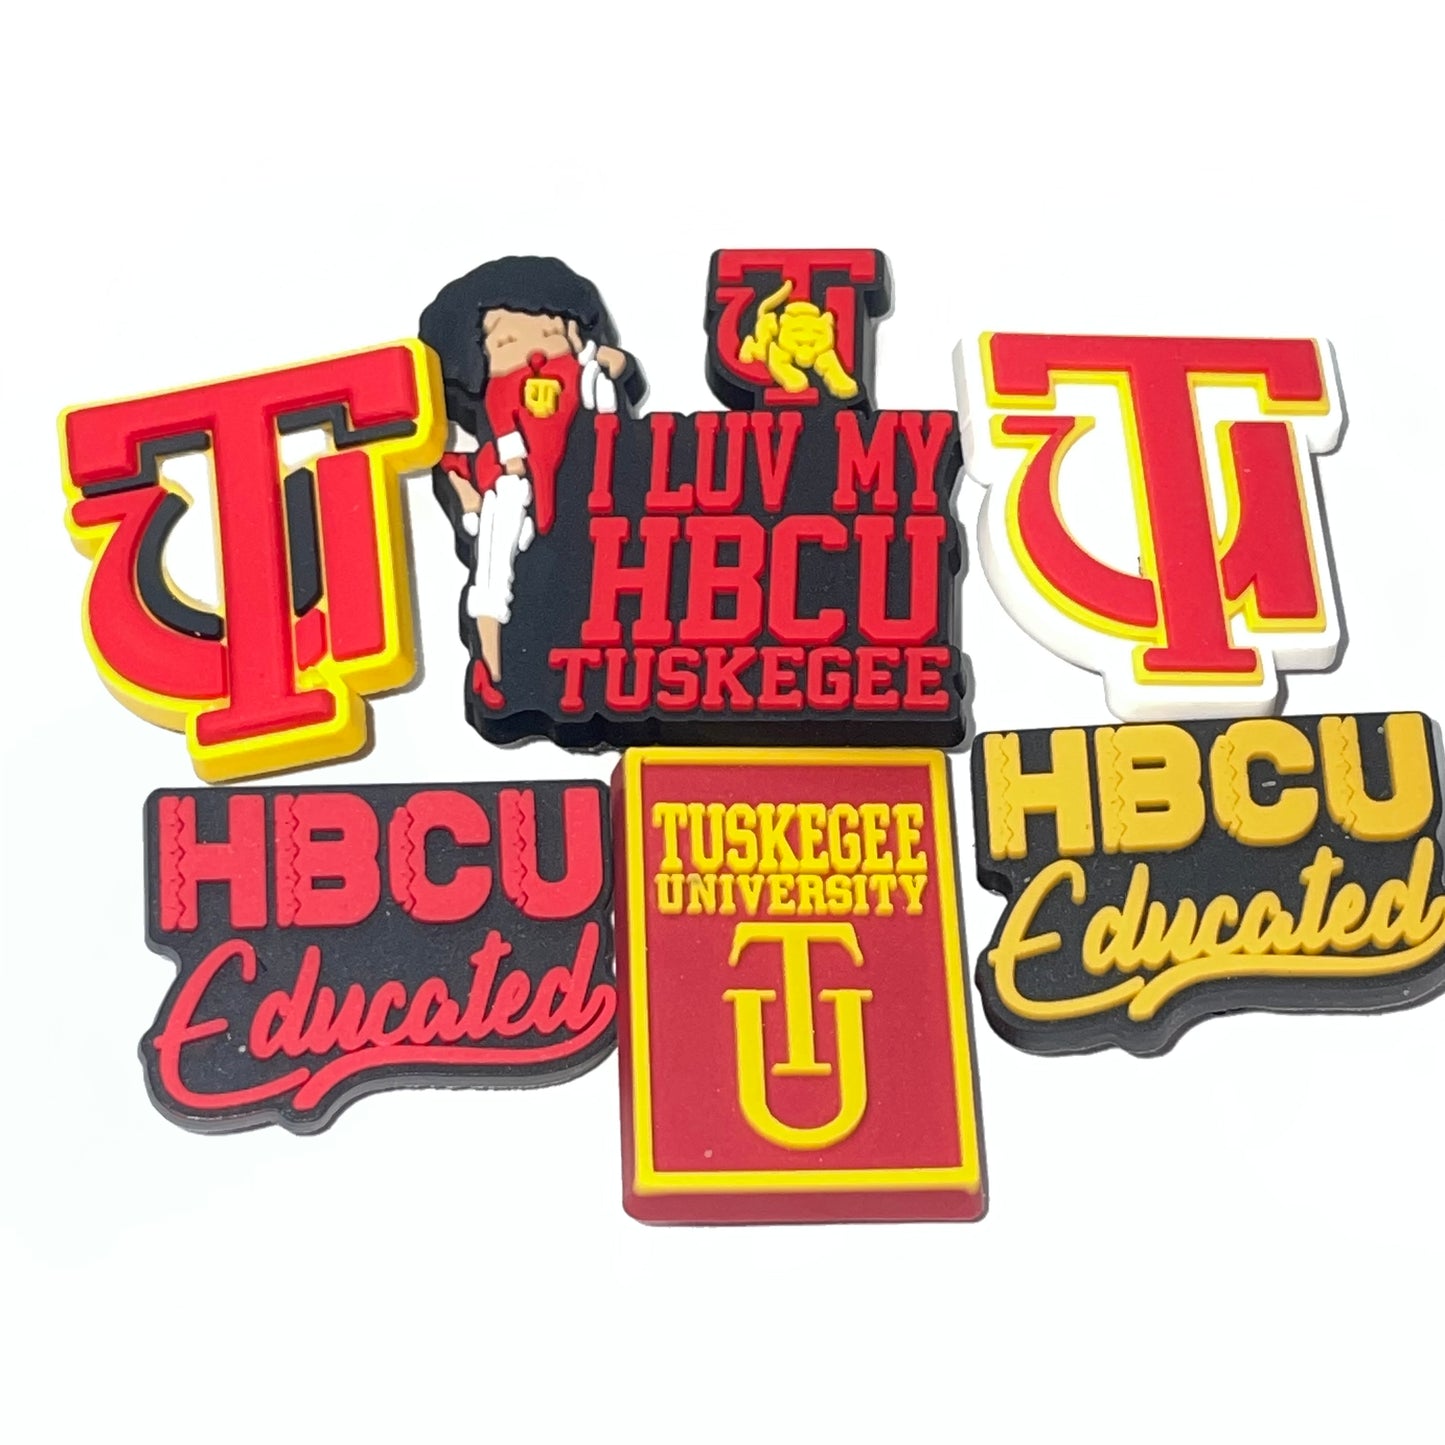 HBCU Tuskegee University Charm